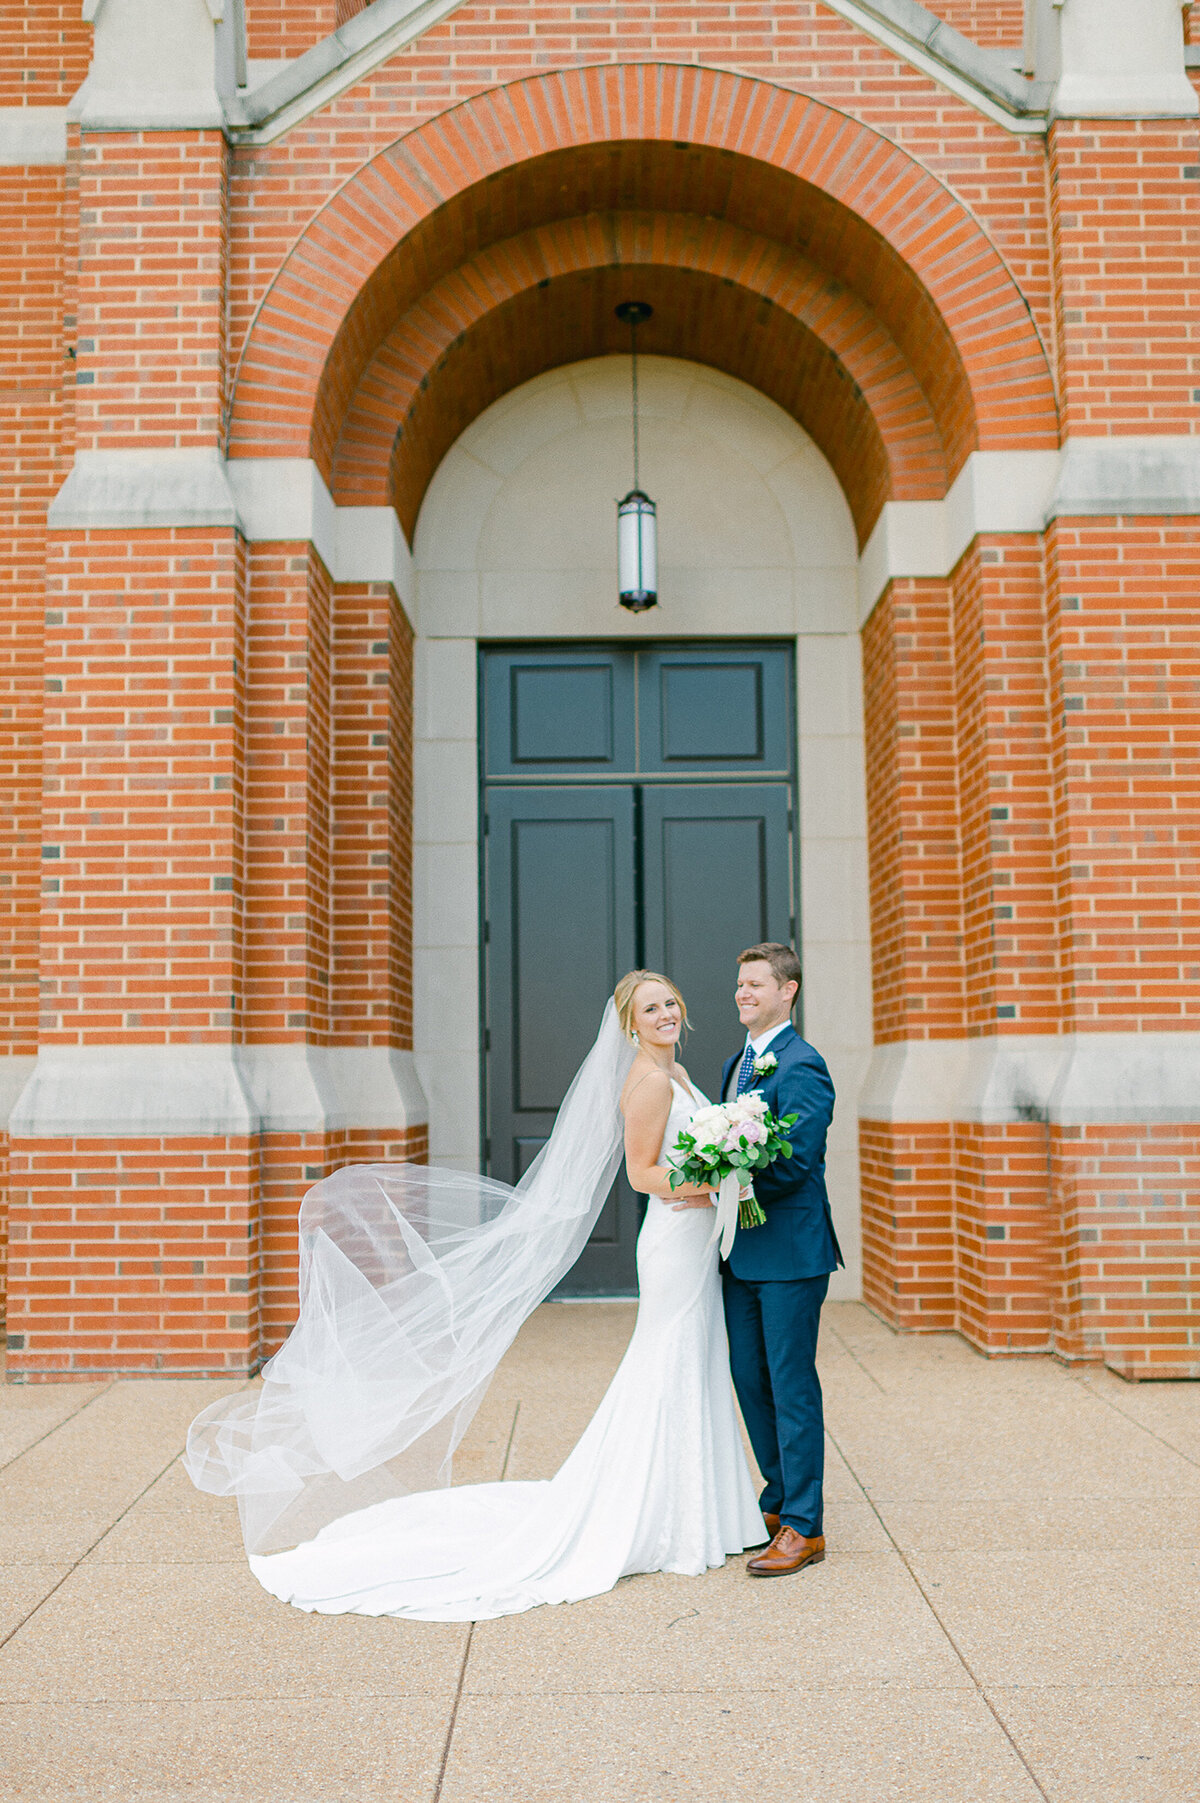 Jennifer Bosak Photography - DC Area Wedding Photography - DC, Virginia, Maryland - Kaitlyn + Jordan - Stone Tower Winery - 54